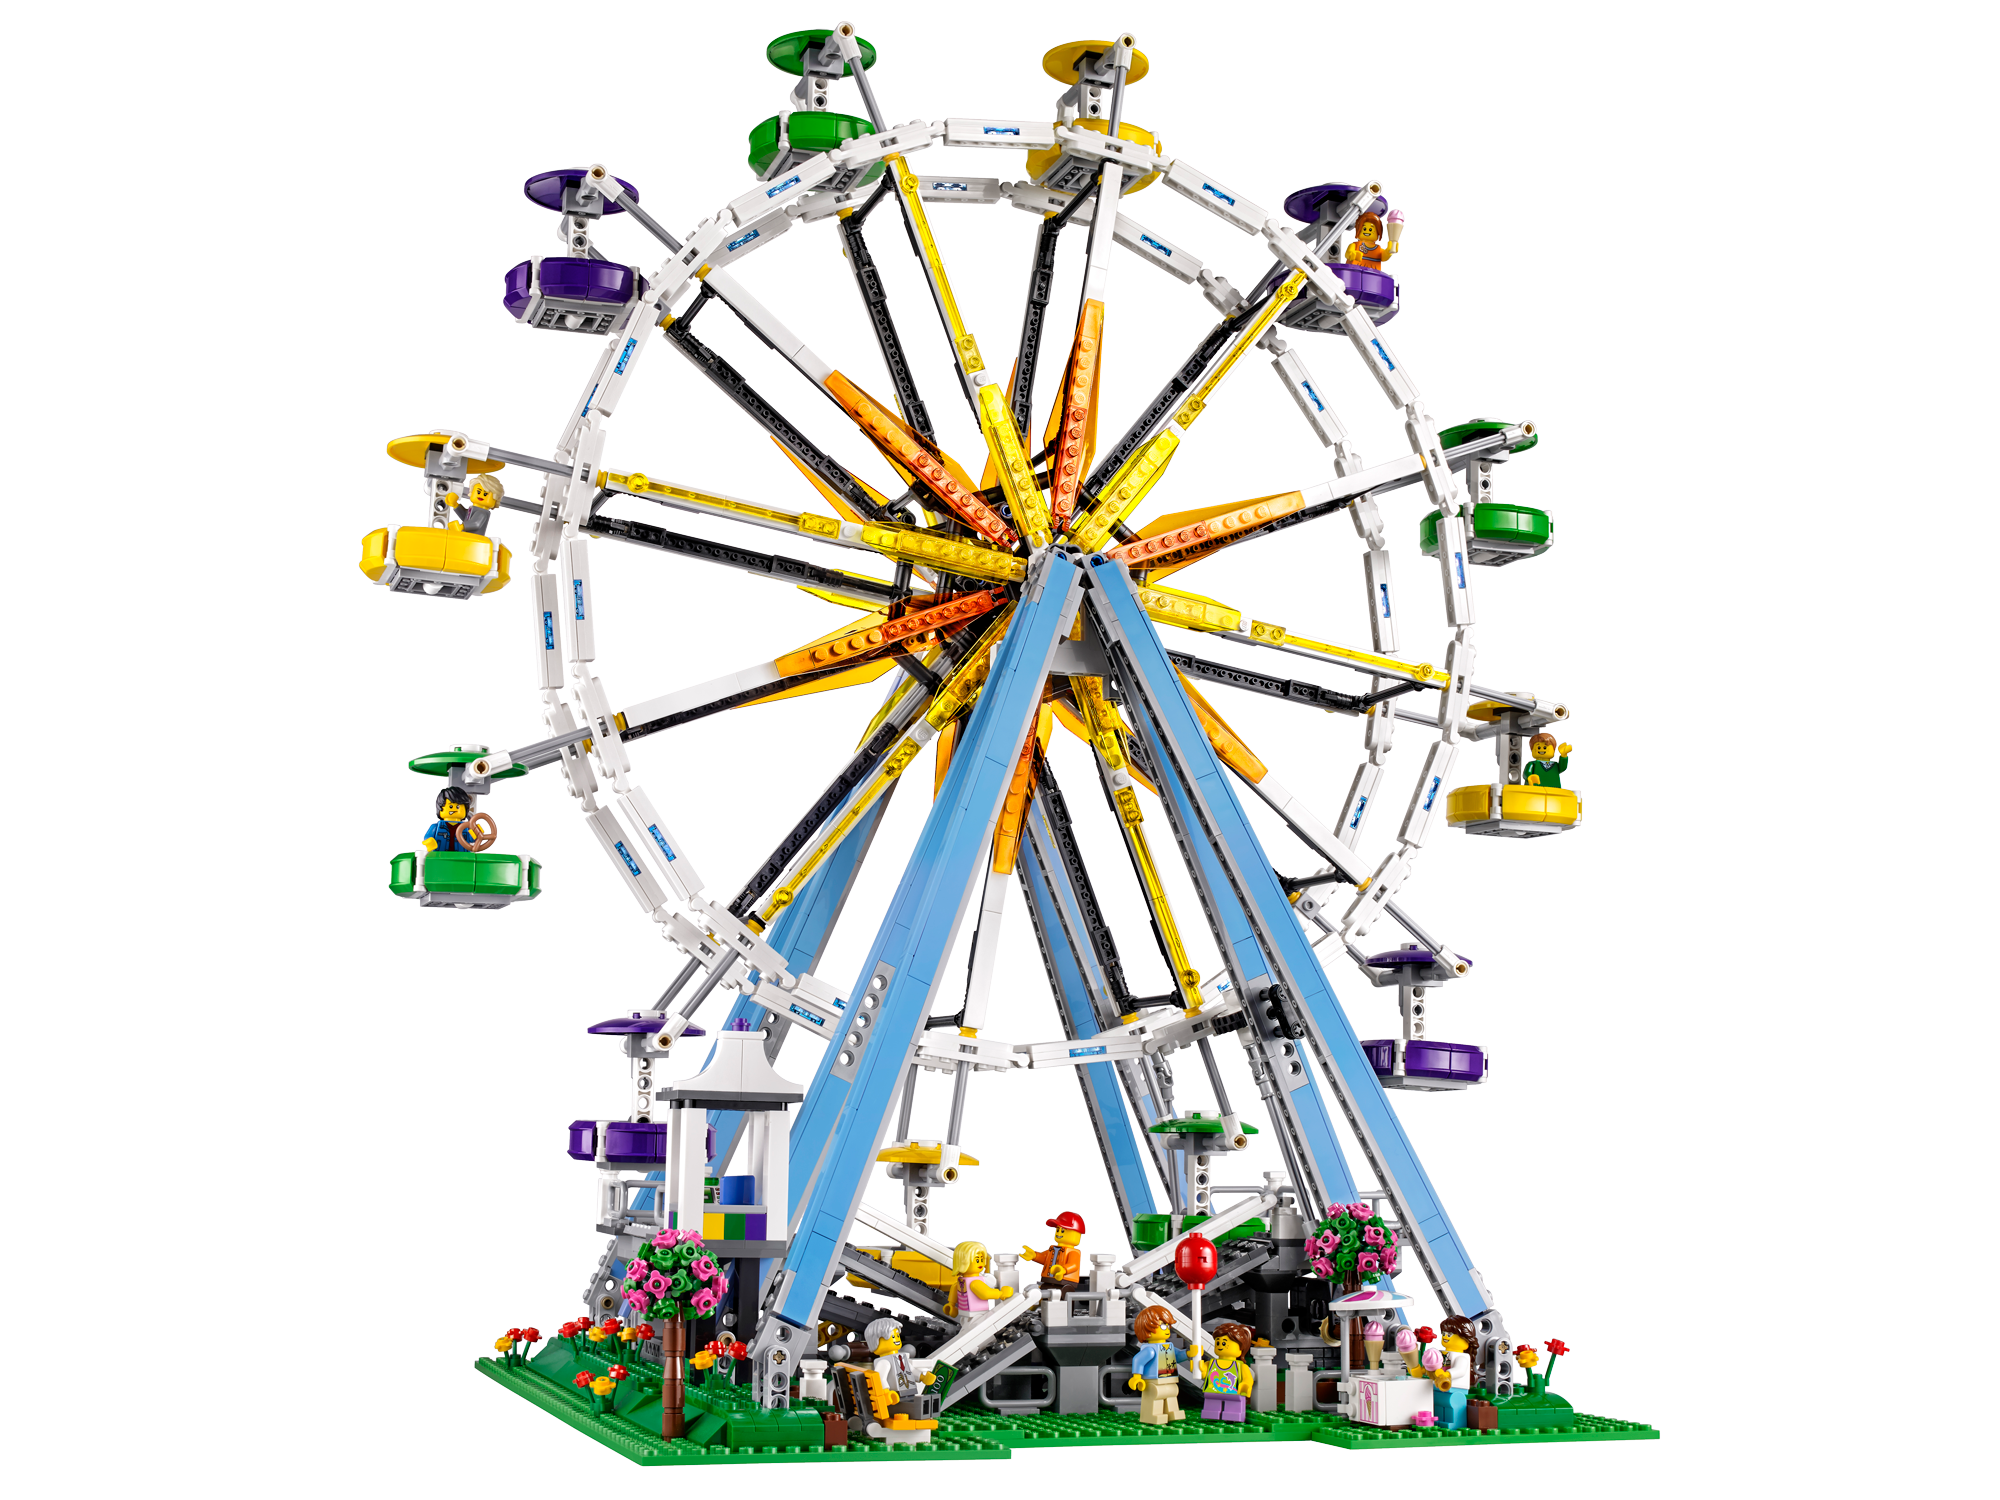 LEGO 10247 Creator Expert Ferris Wheel – My Hobbies